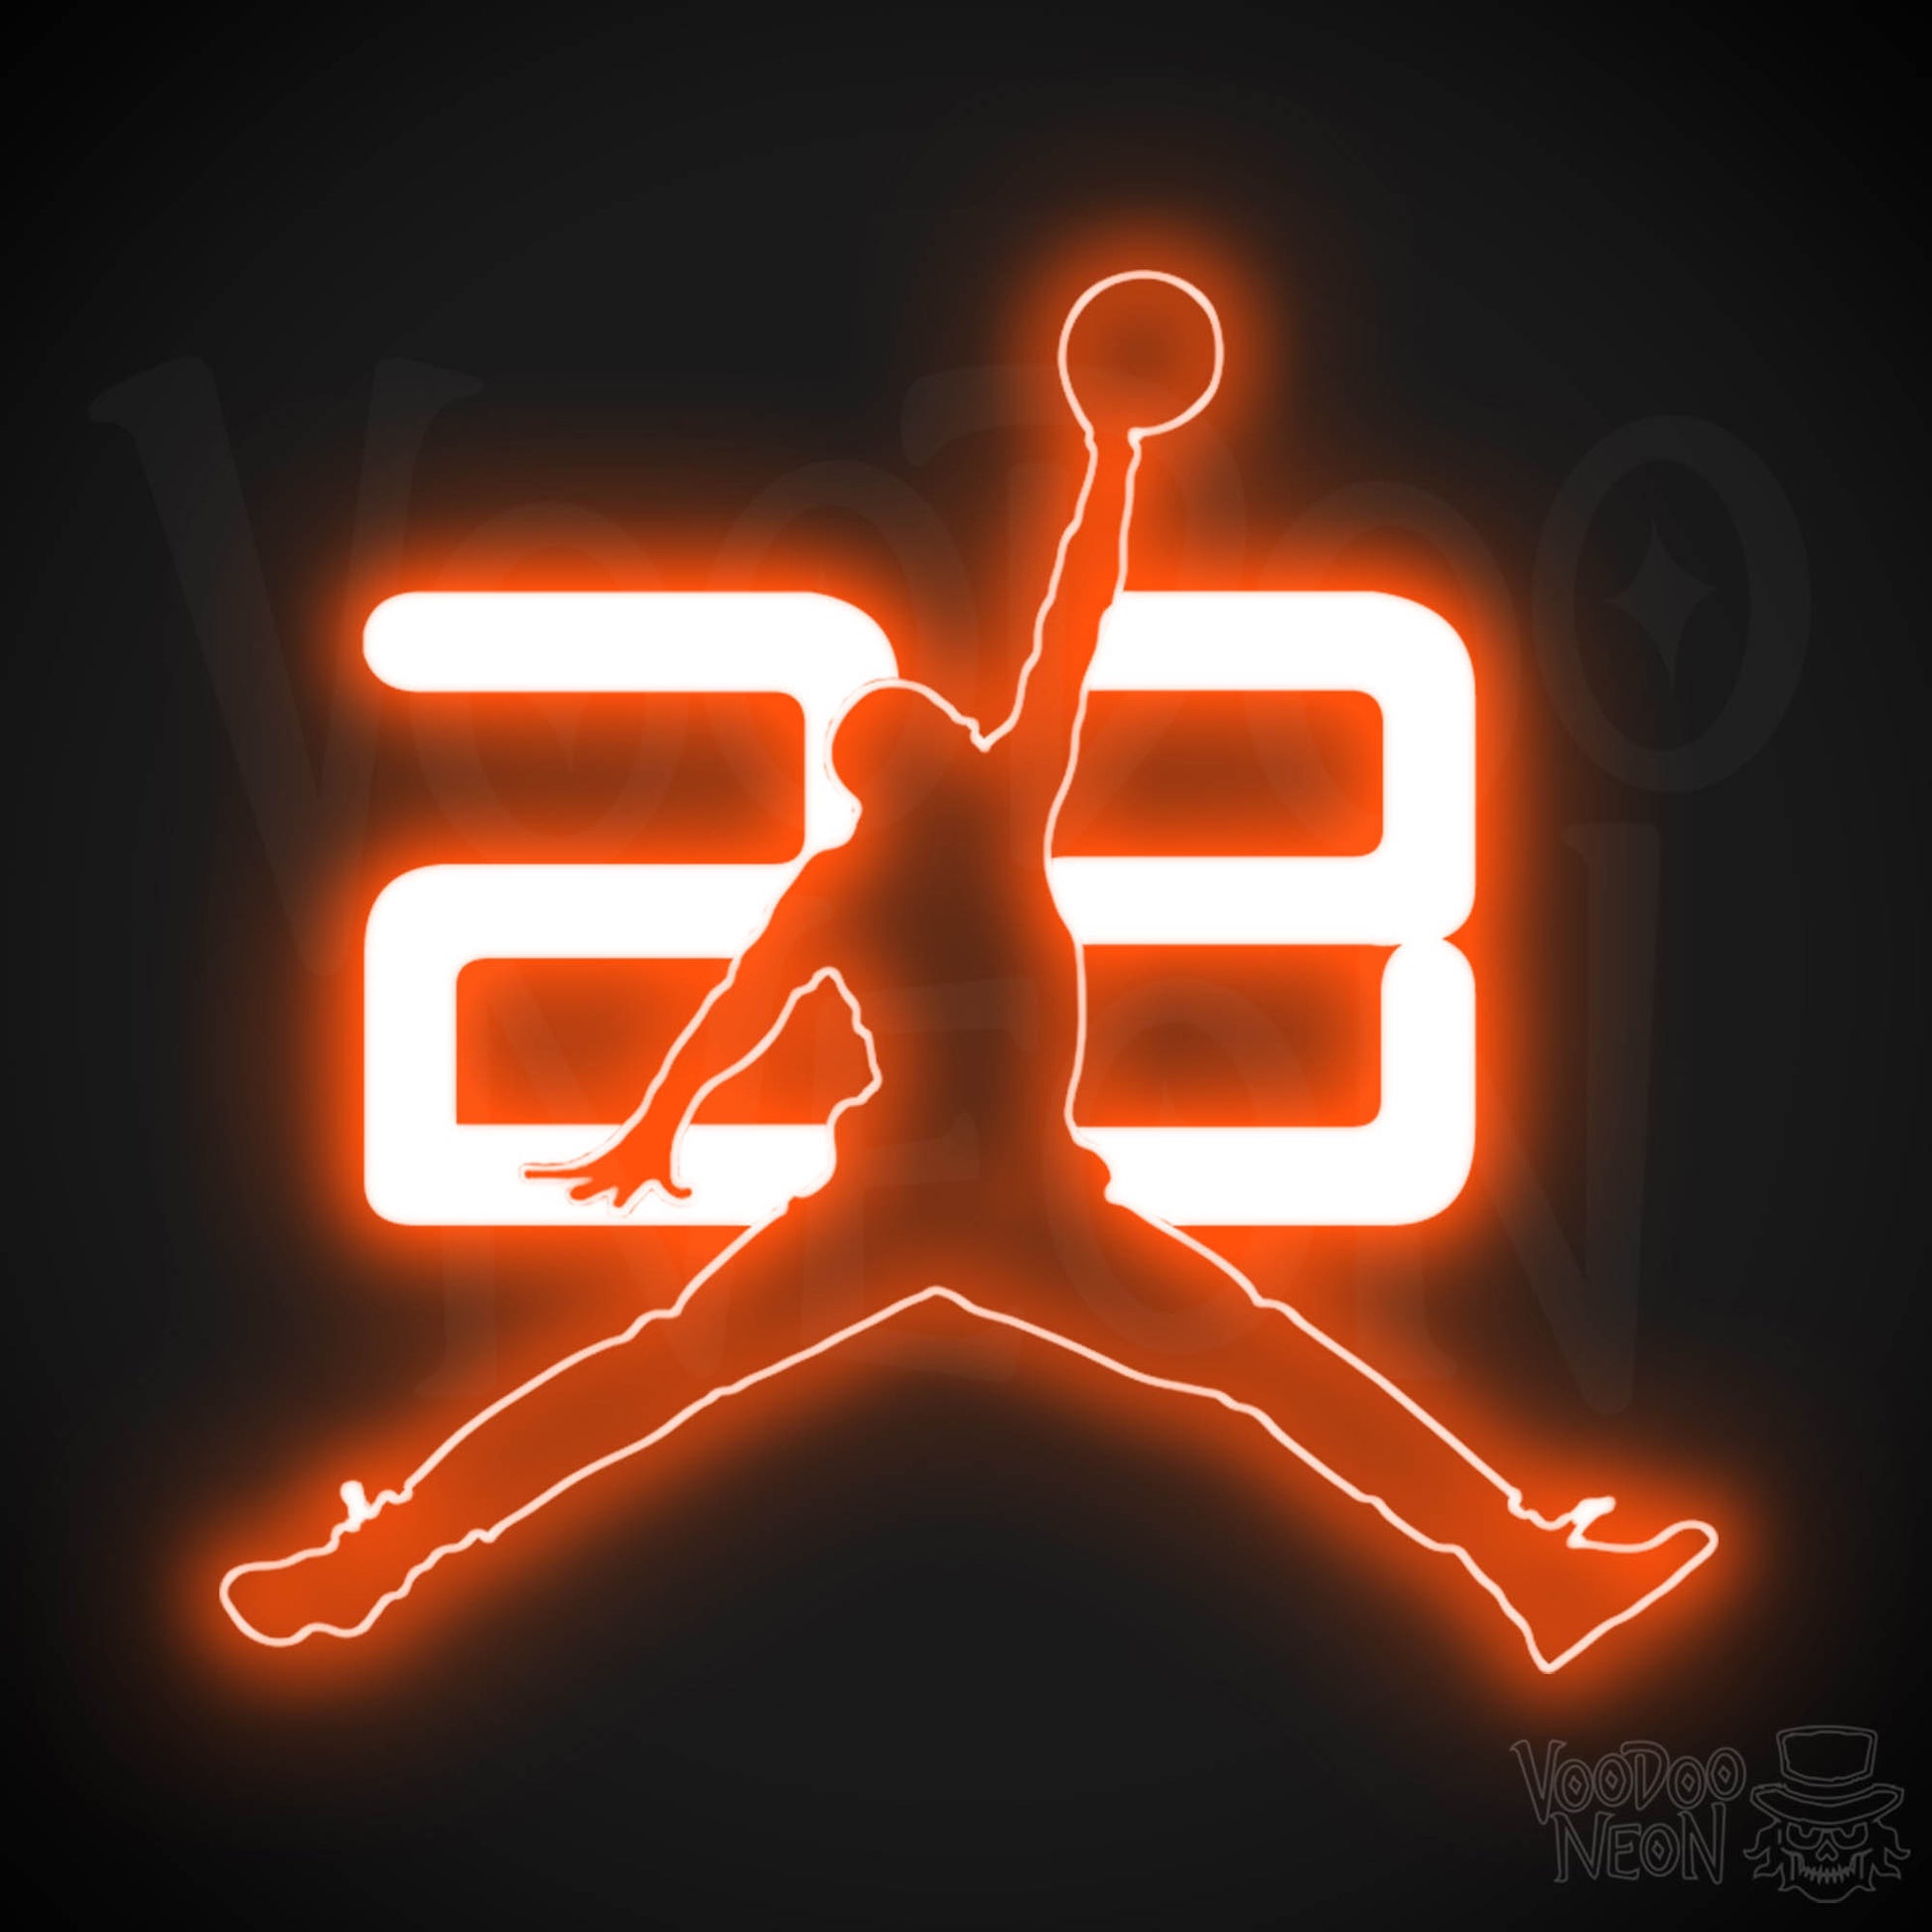 Neon Jordan Dunk - Michael Jordan Neon Wall Art - Neon Basketball Dunk Sign - Color Orange